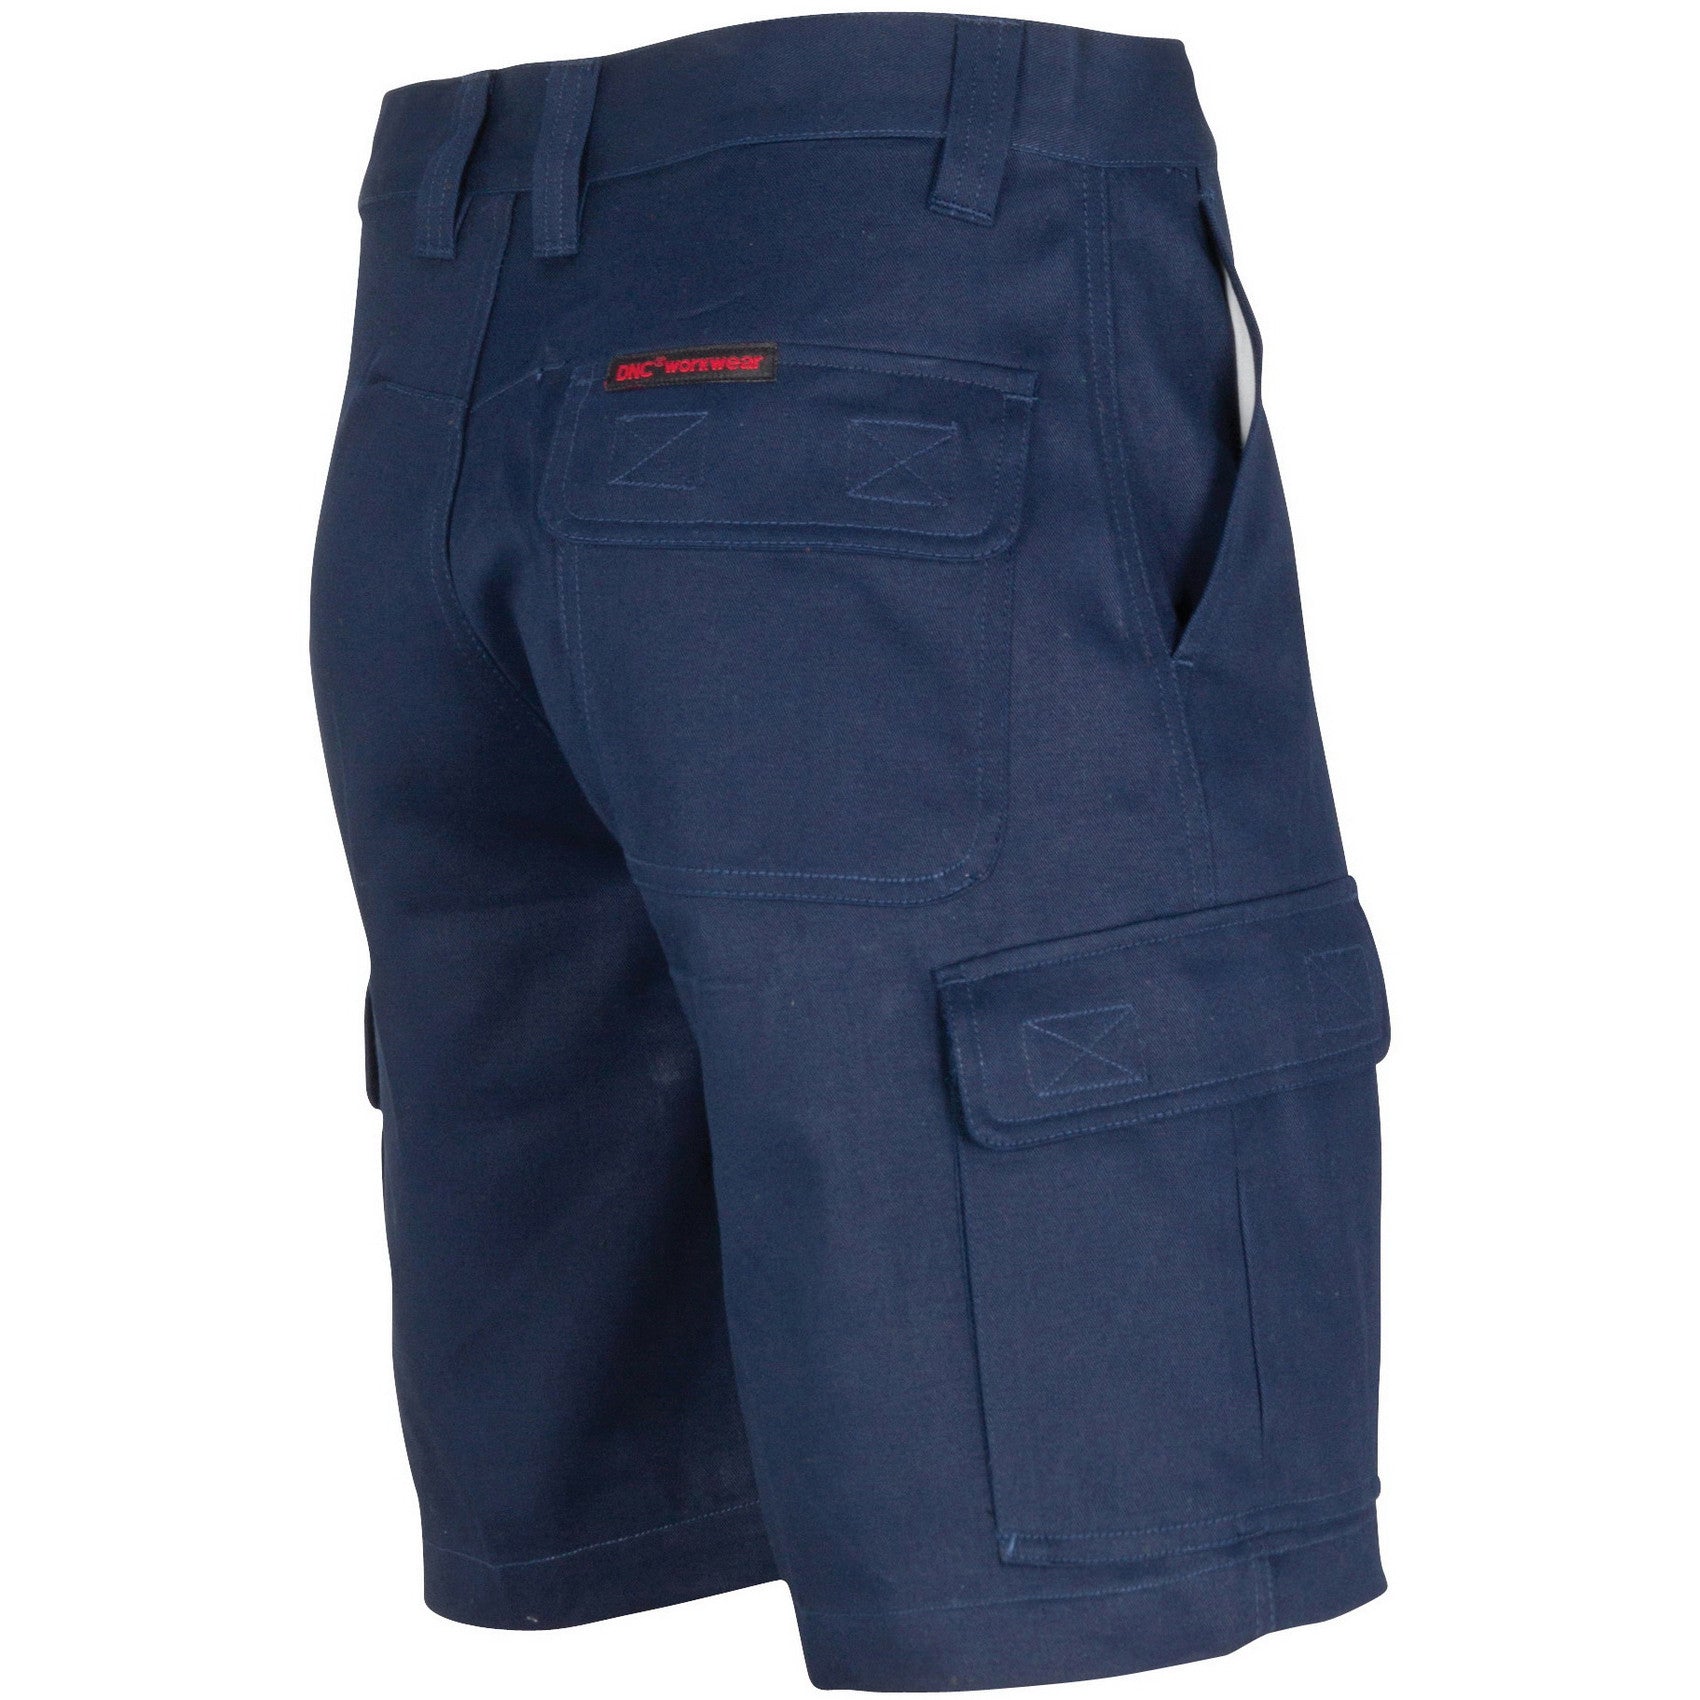 DNC Middle Weight Cotton Double Slant Cargo Shorts - With Shorter Leg Length (3358)